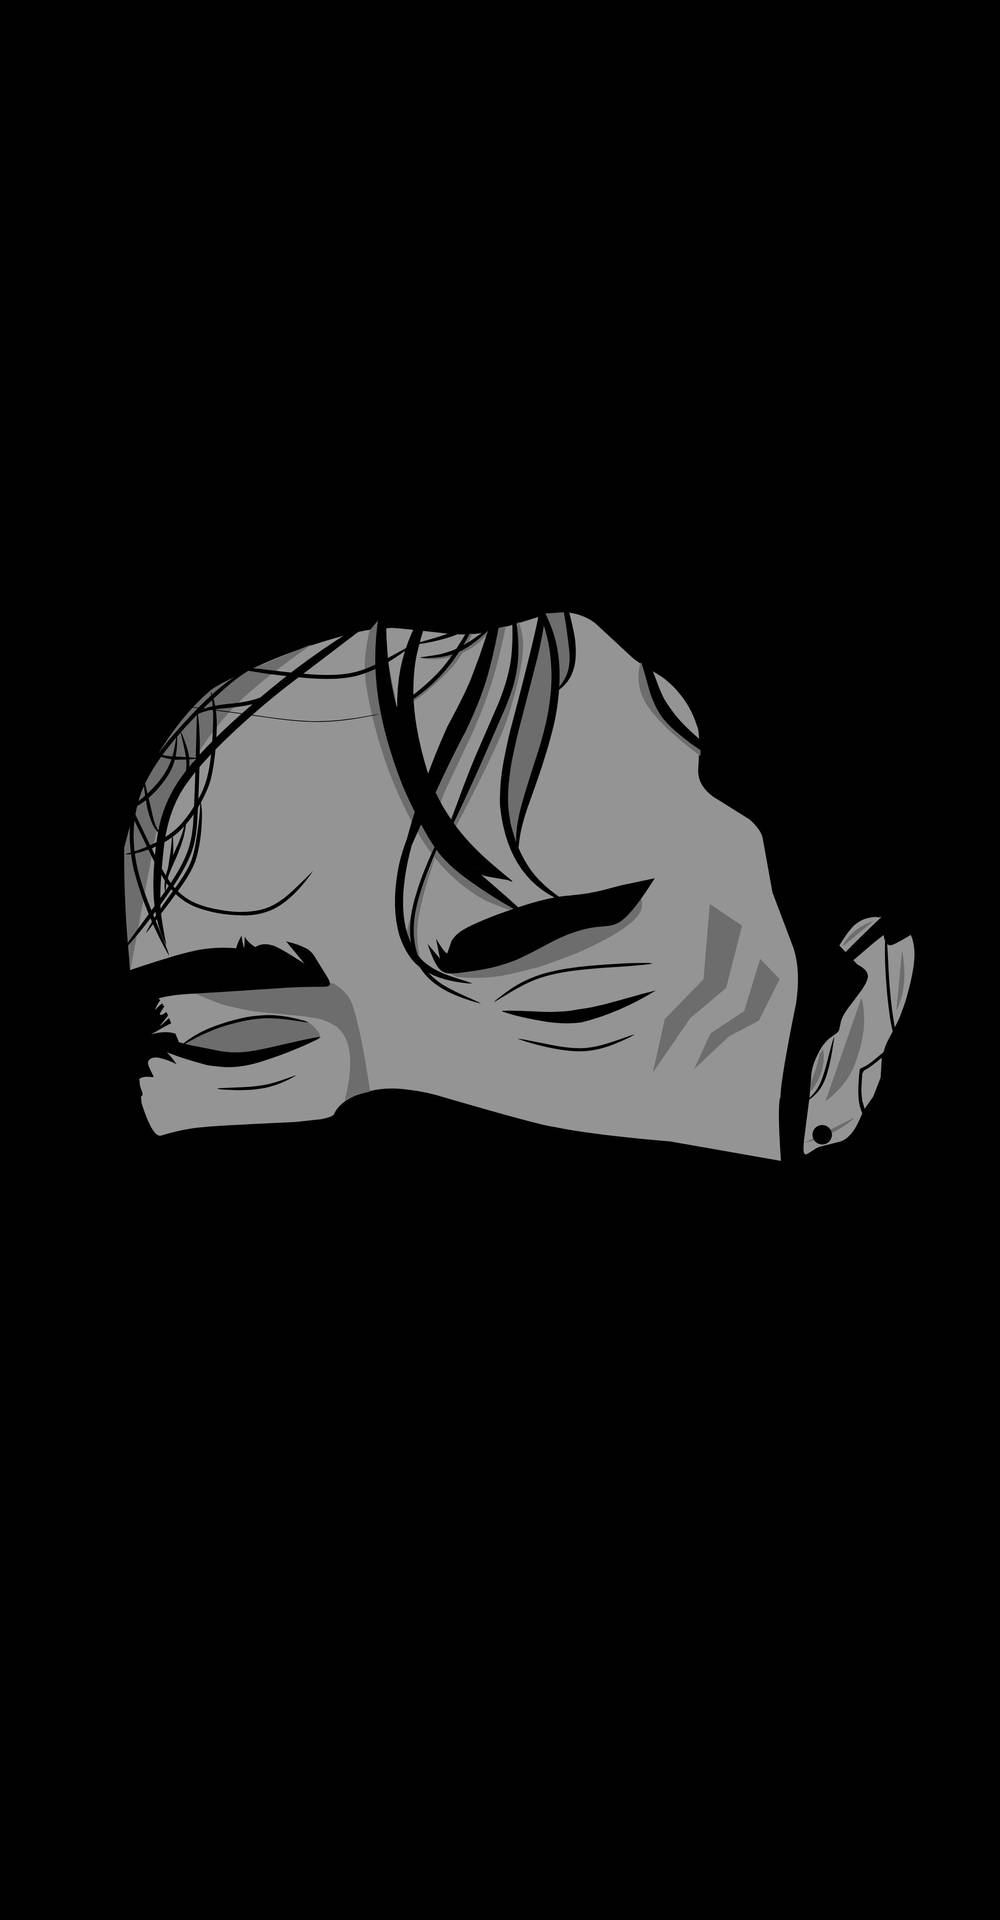 Dark Android Sad Boy Illustration Background